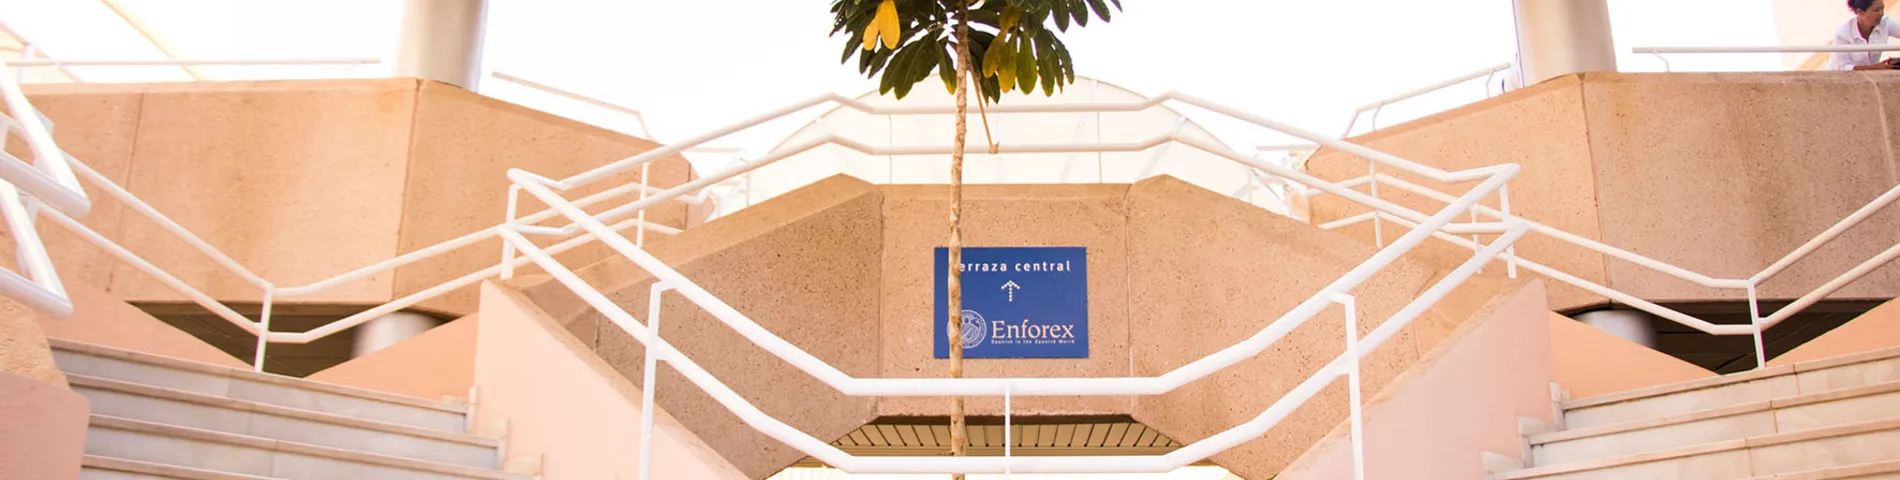 Enforex International Summer Centre - Centro зображення 1